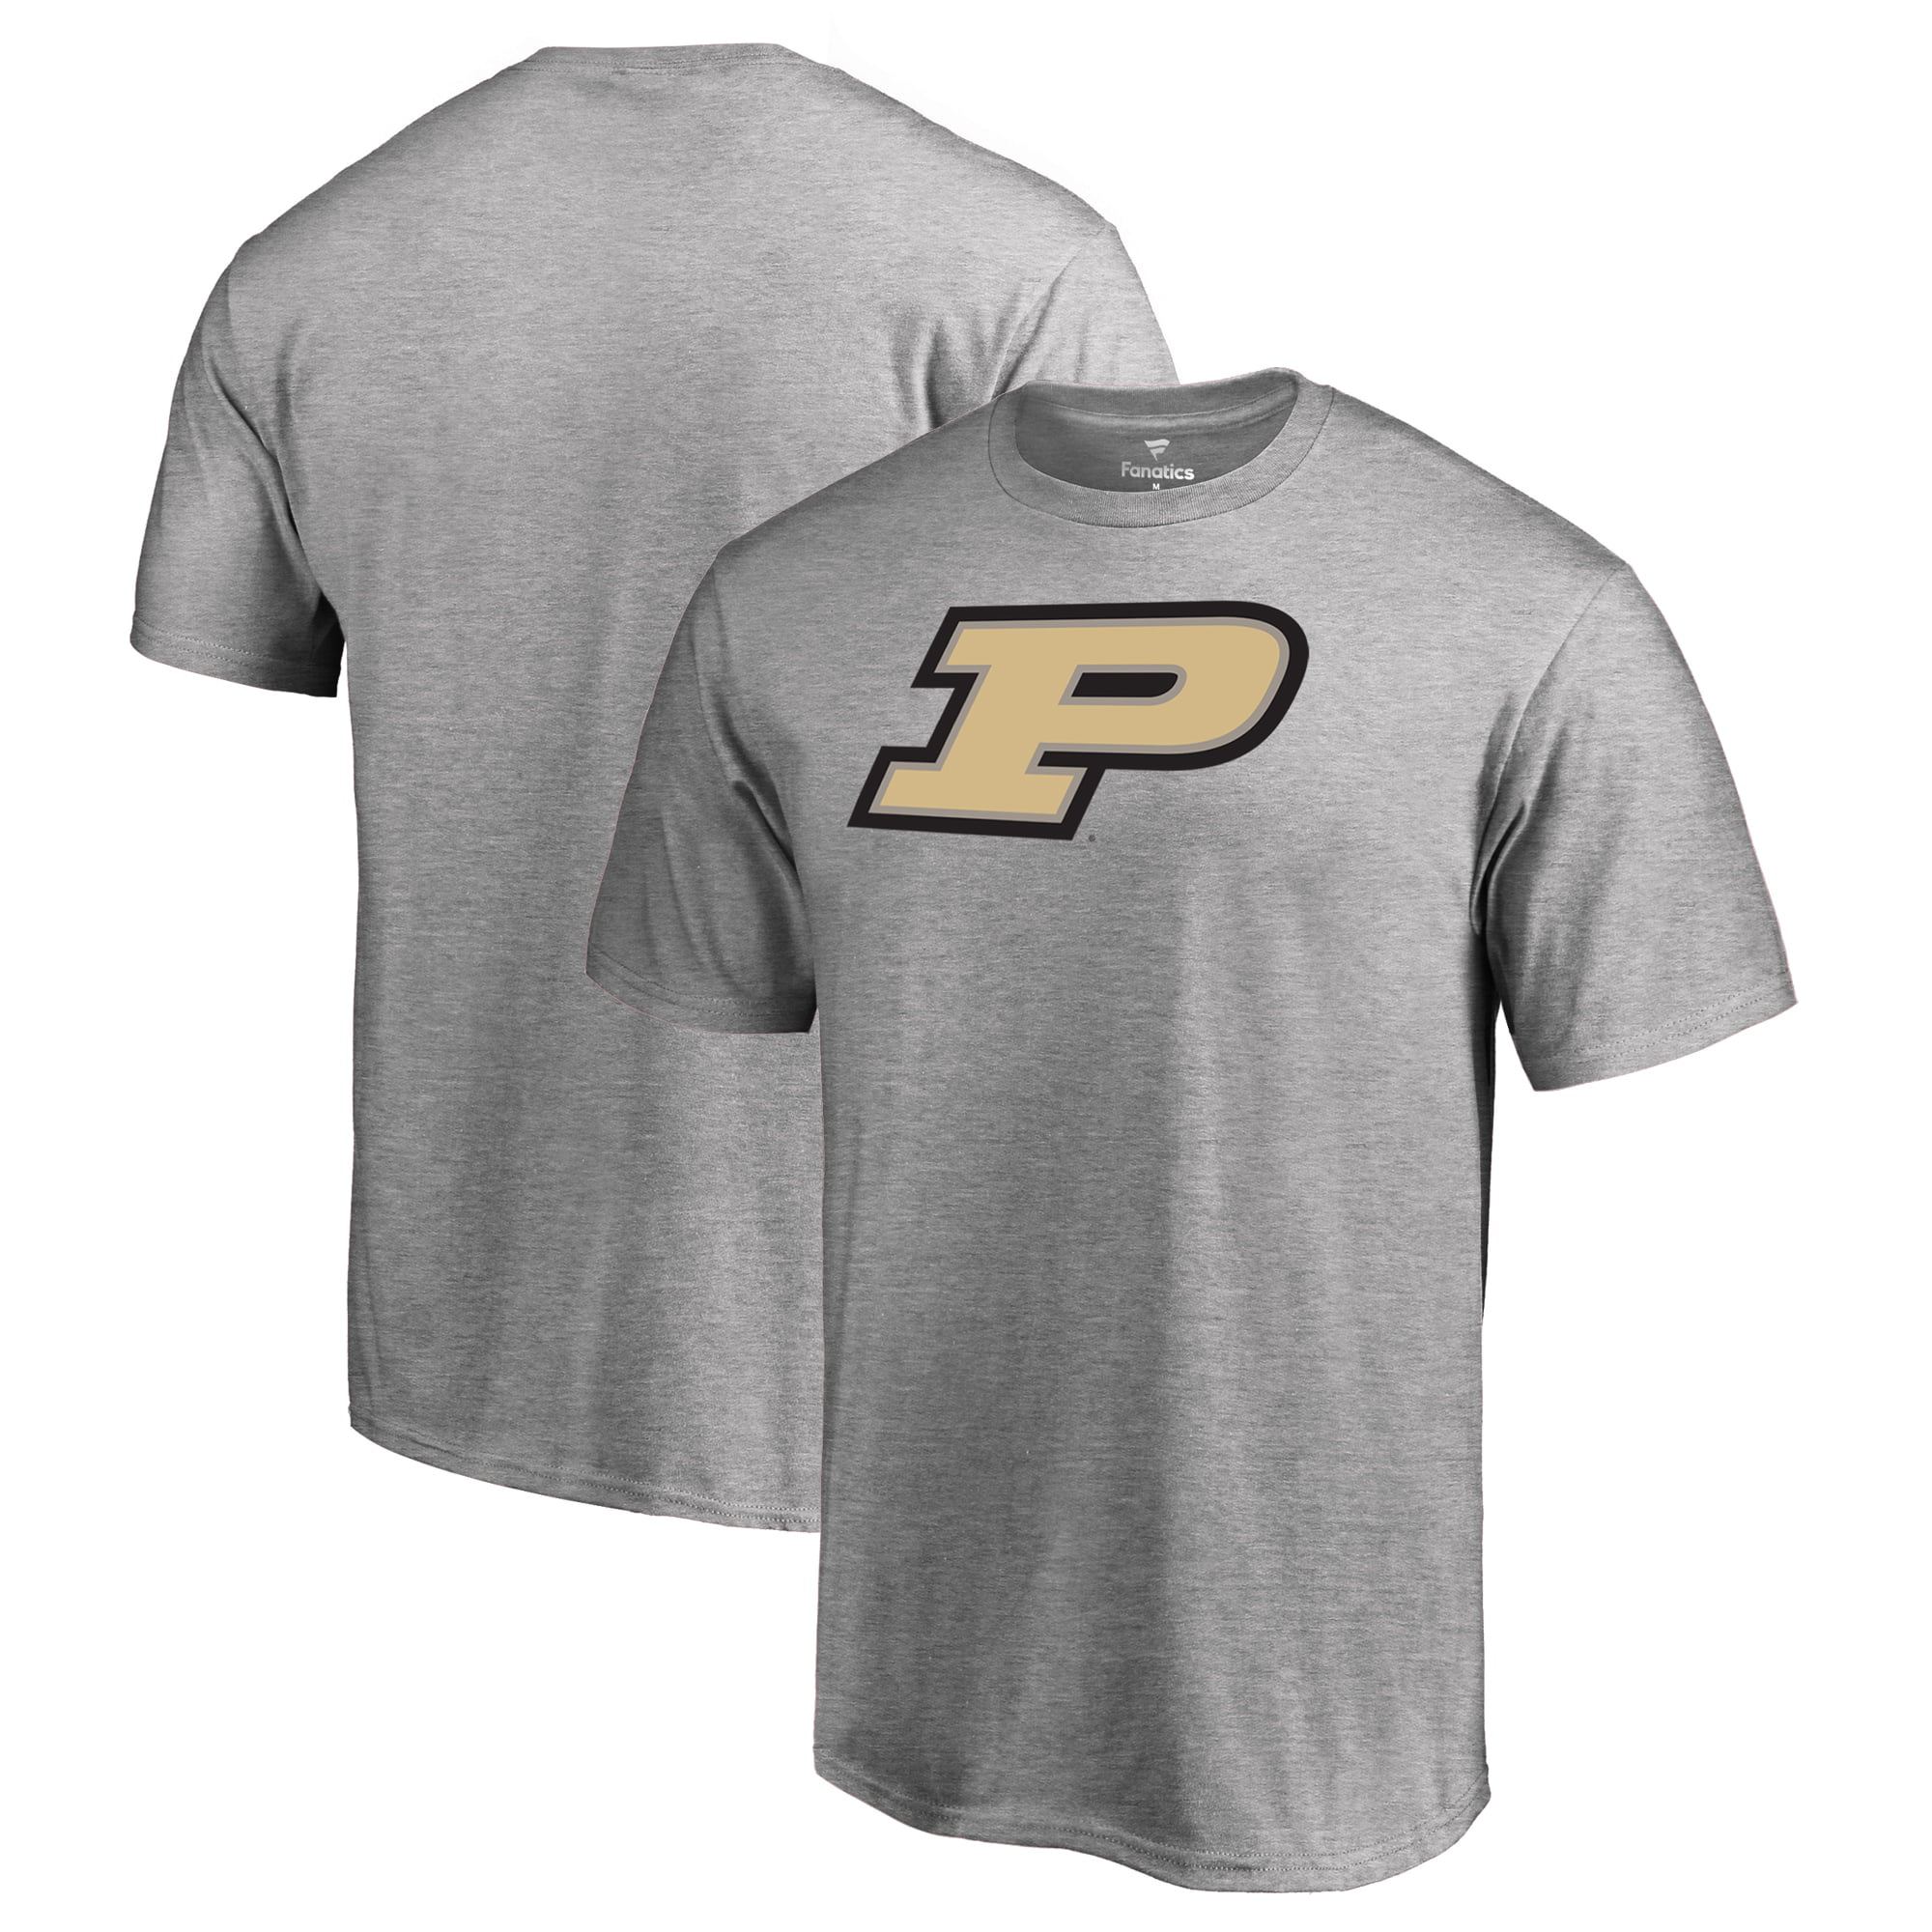 Geo ProSphere Purdue University Mens Performance T-Shirt